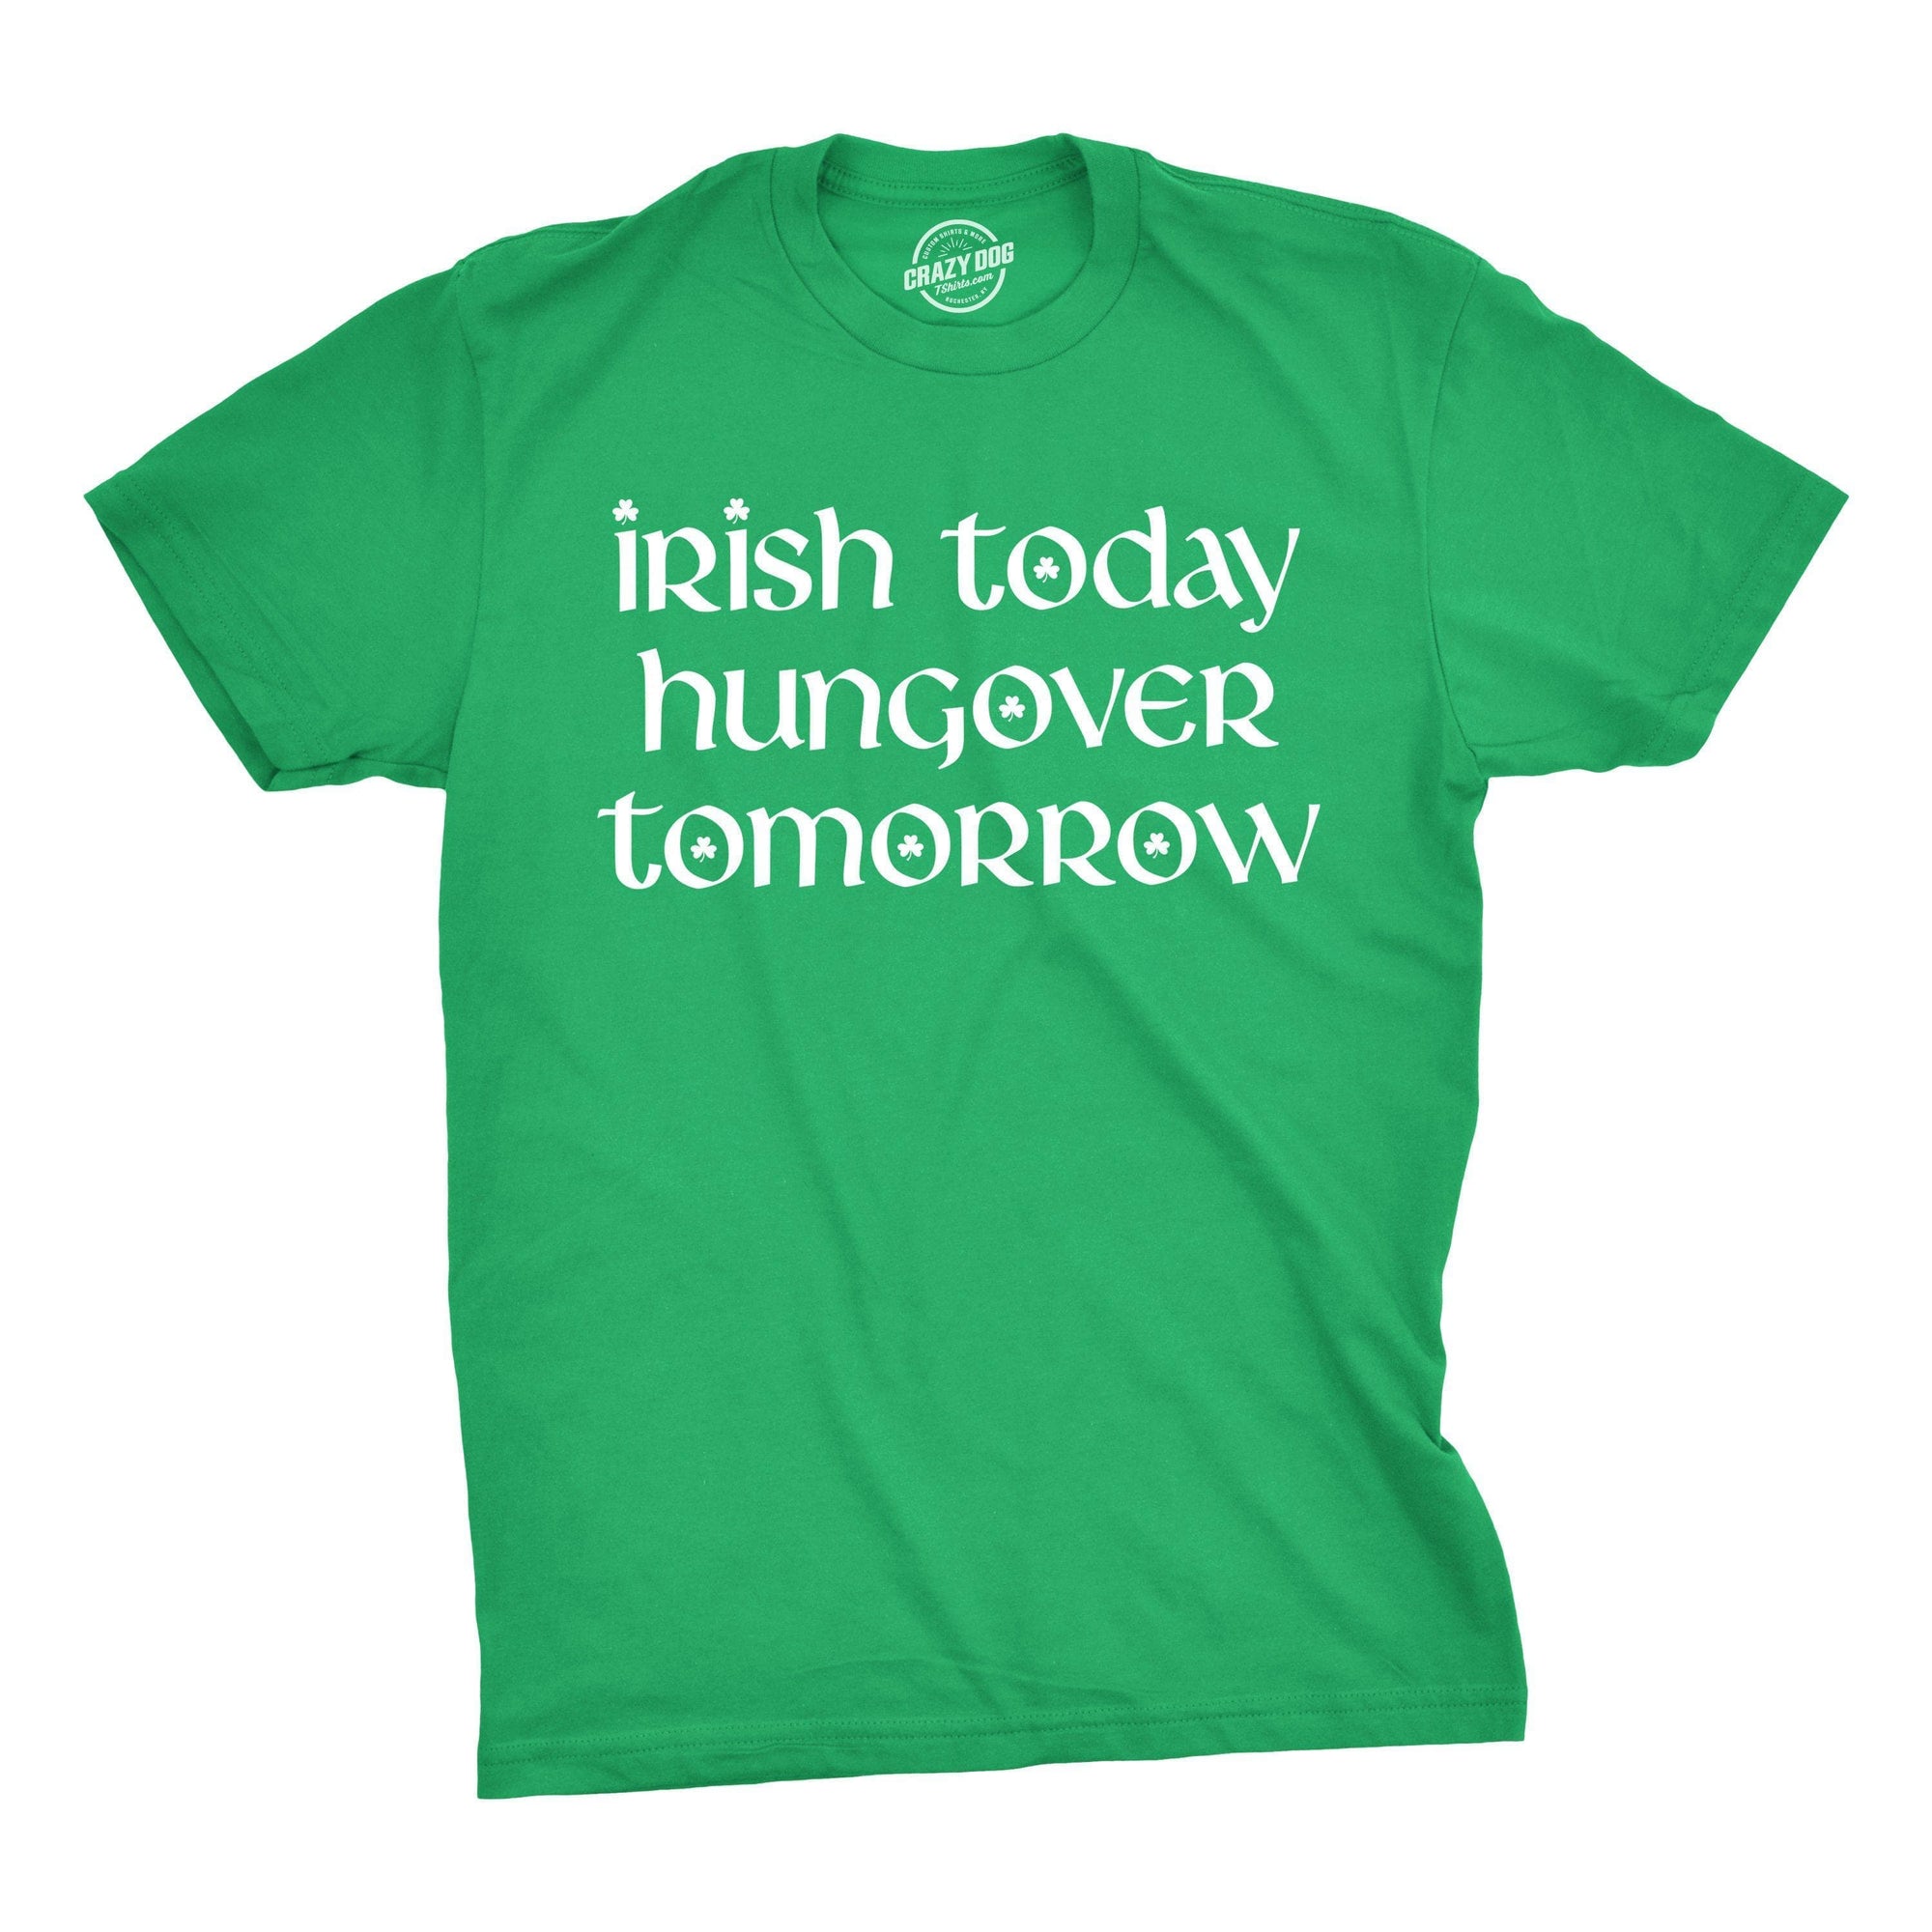 Irish / St Patrick's Day Irish Yoga Soft Cotton T-Shirt – NYC Tee Shop